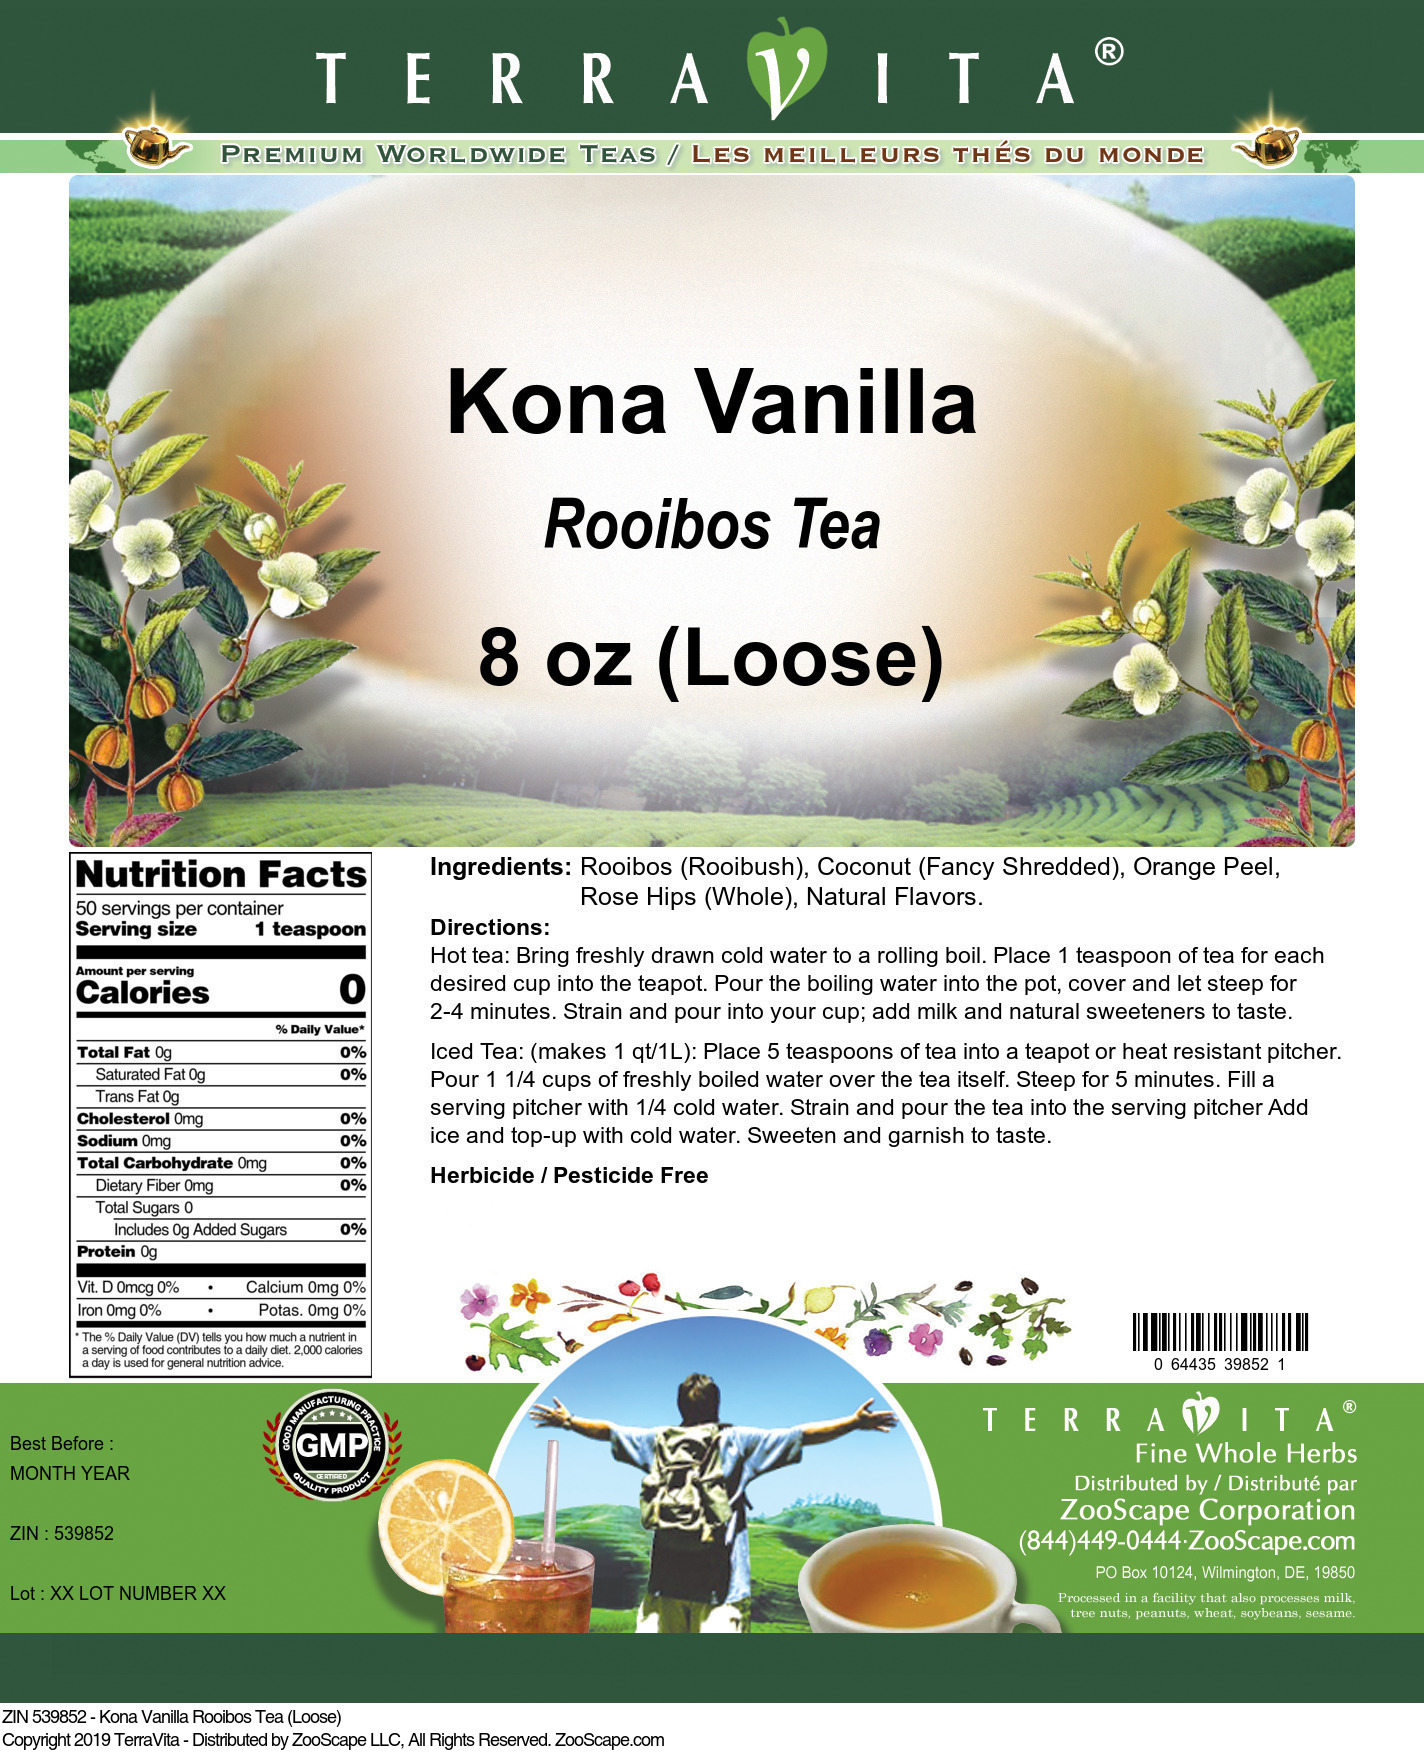 Kona Vanilla Rooibos Tea (Loose) - Label